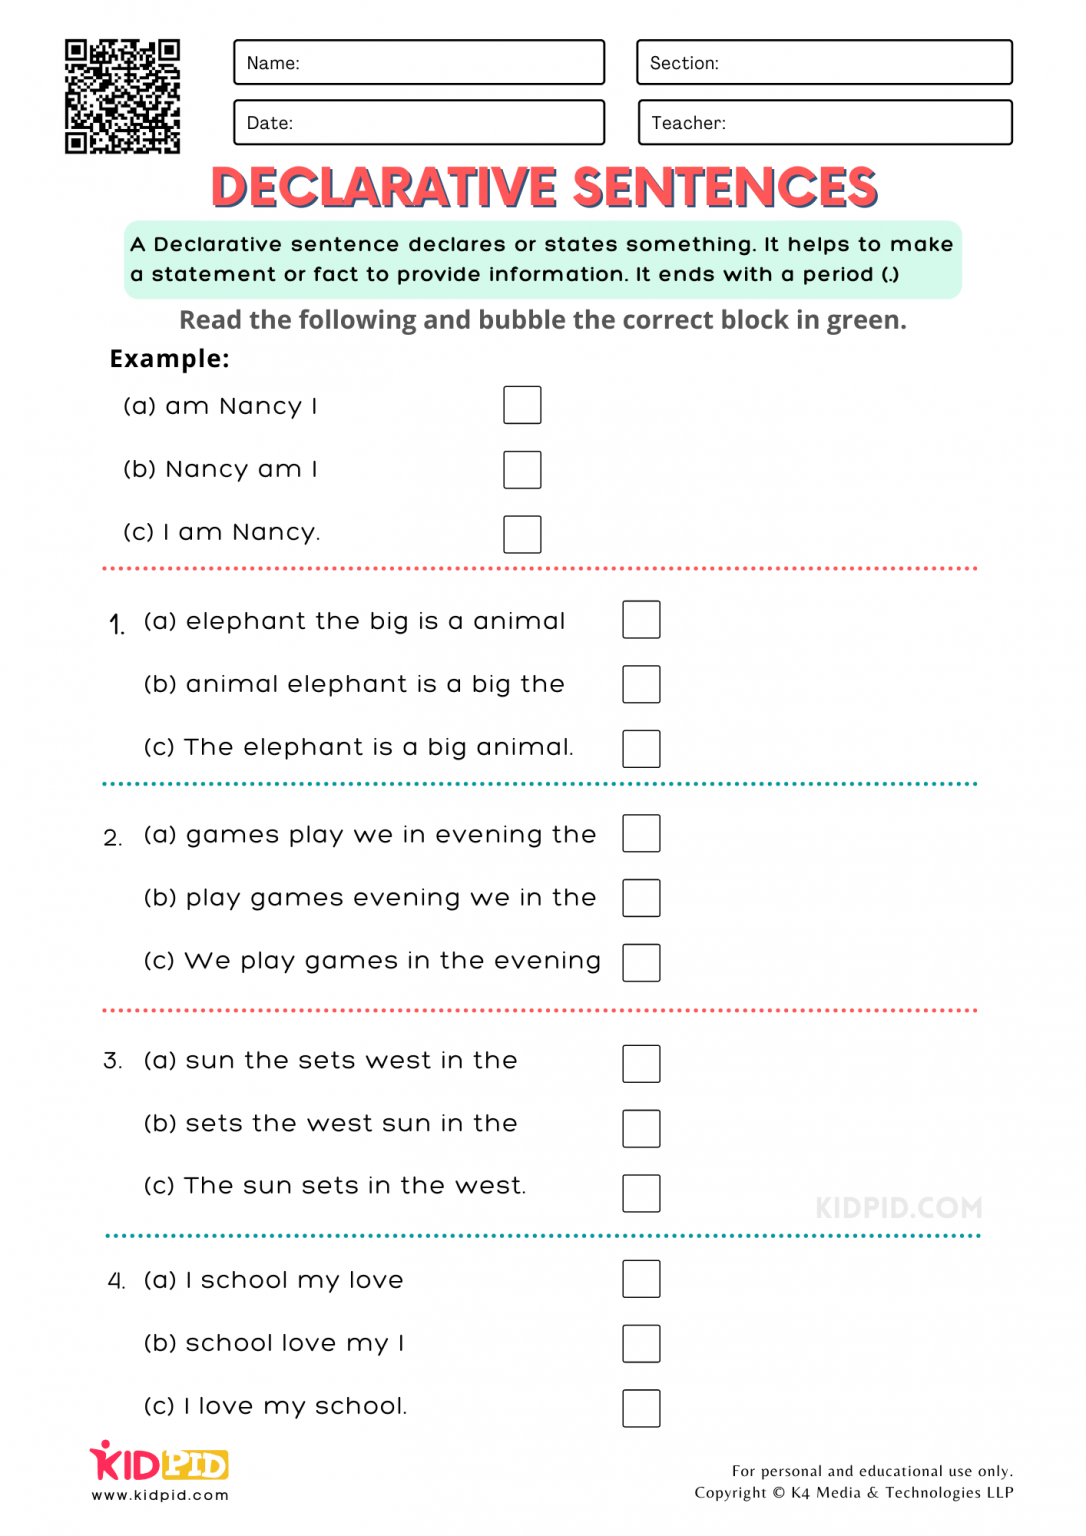 Declarative Sentence Free Printable Worksheets For Grade 1 Kidpid